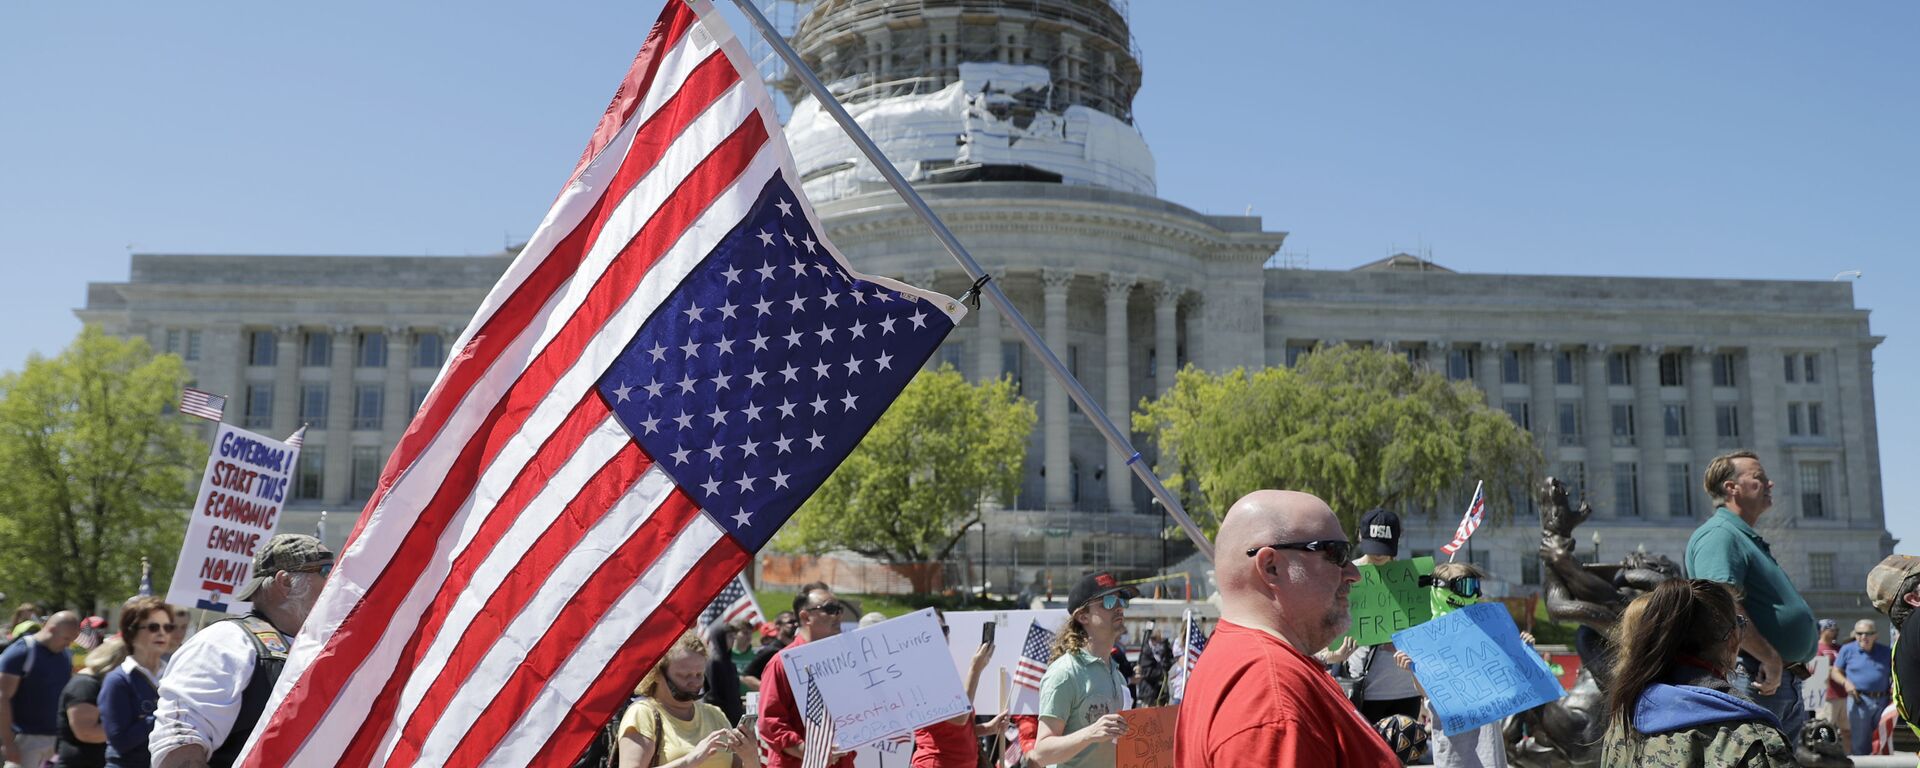 Участники акции протеста против карантина перед зданием Капитолия, Вашингтон, США, 21 апреля 22020 года - Sputnik Lietuva, 1920, 25.02.2021